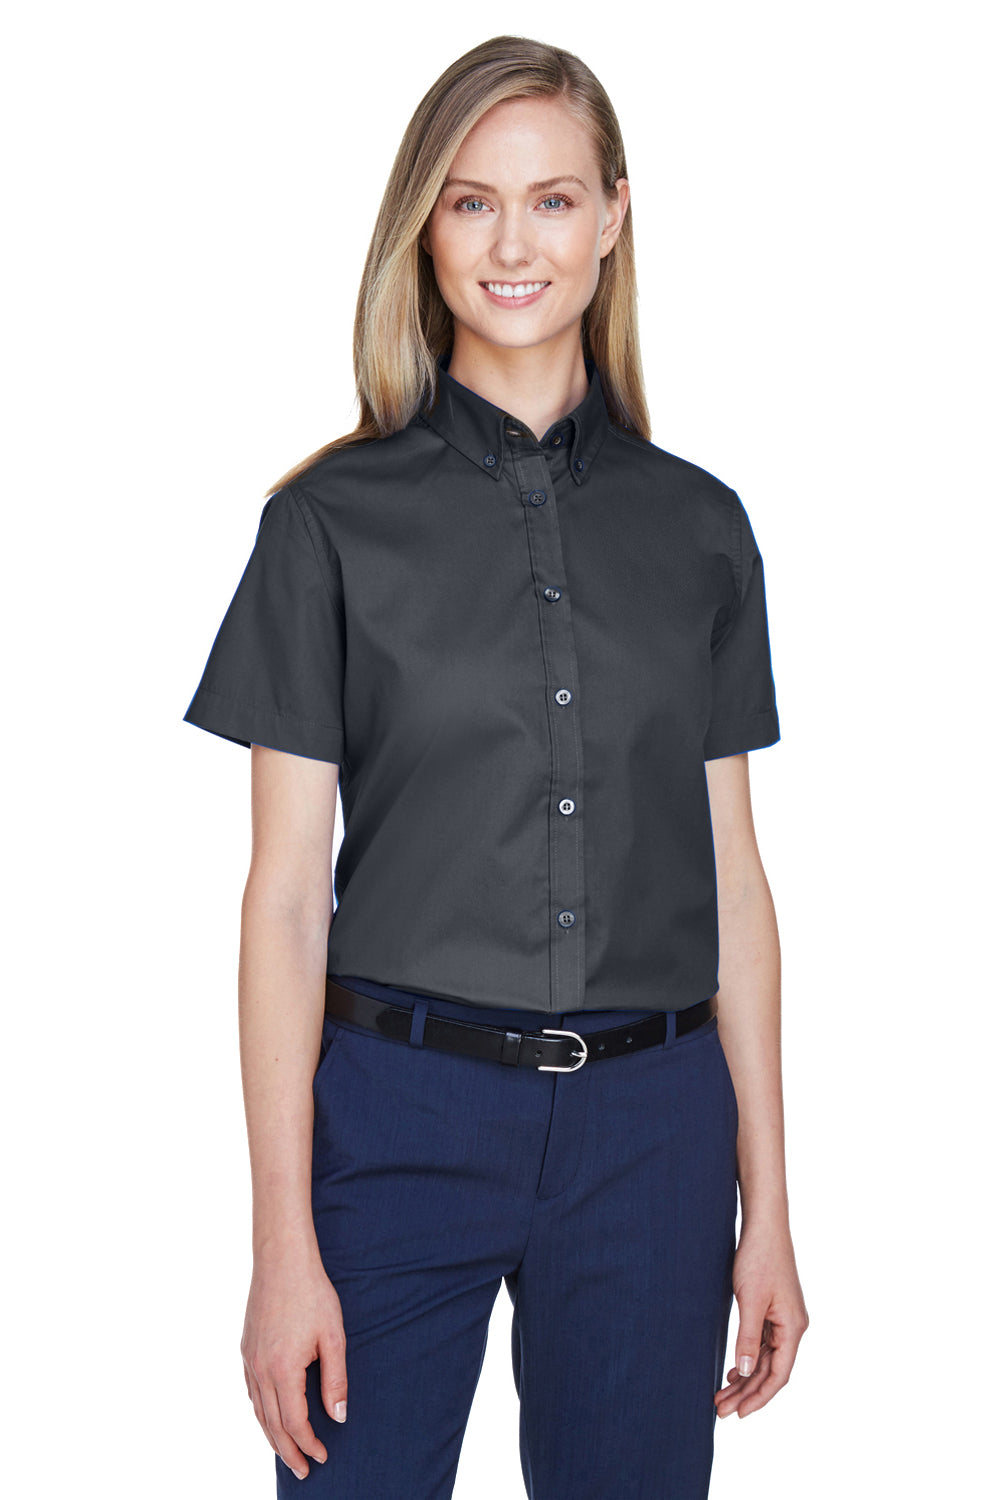 Core 365 78194 Womens Optimum Short Sleeve Button Down Shirt Carbon Grey Front